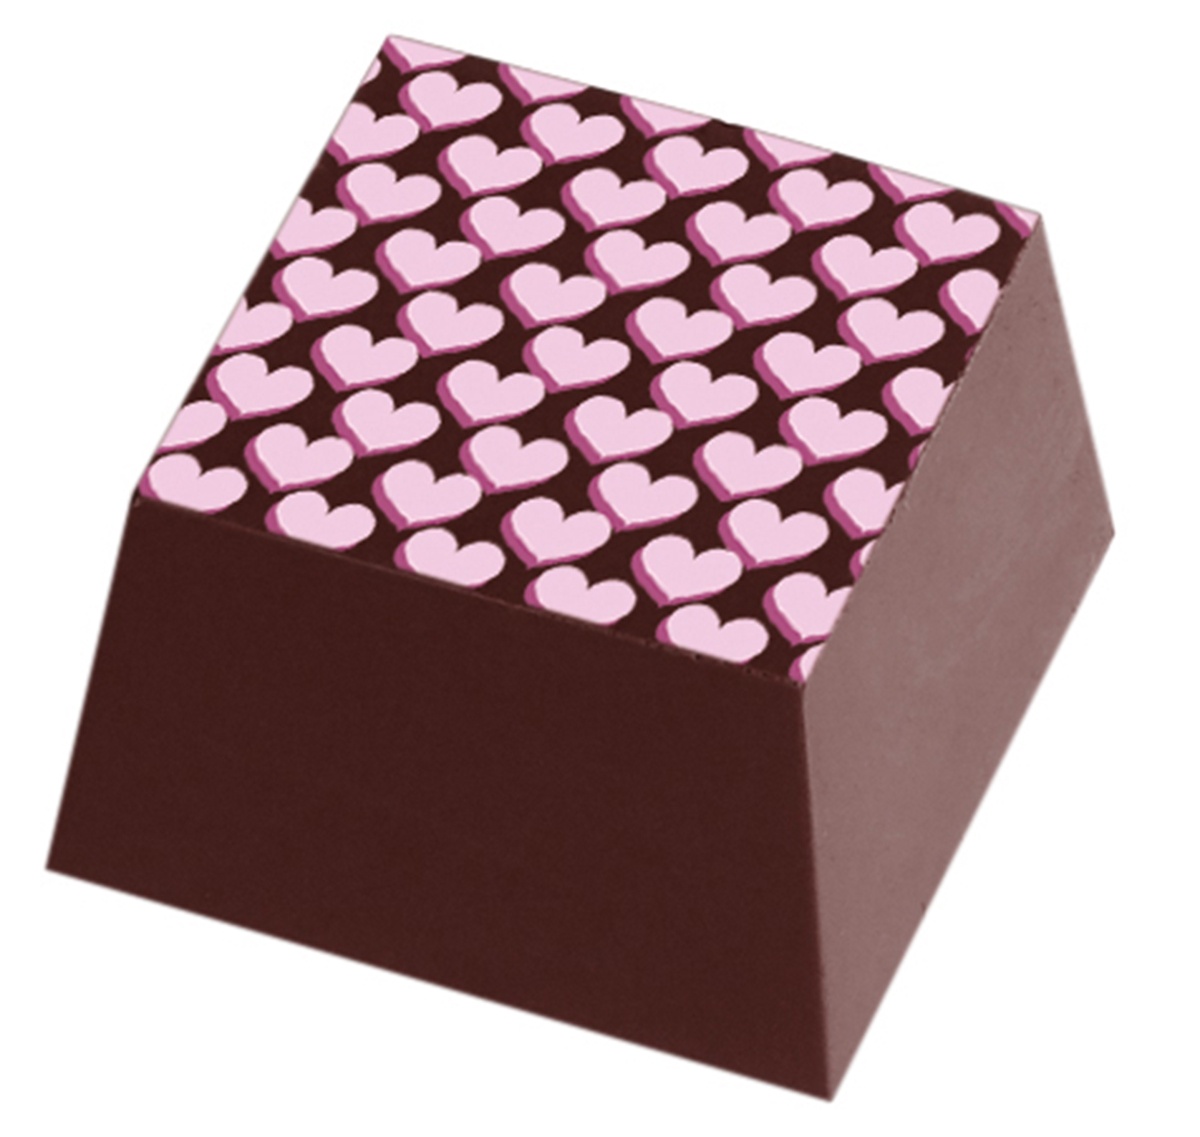 Chocolate Transfer Sheet - Hearts & Vines